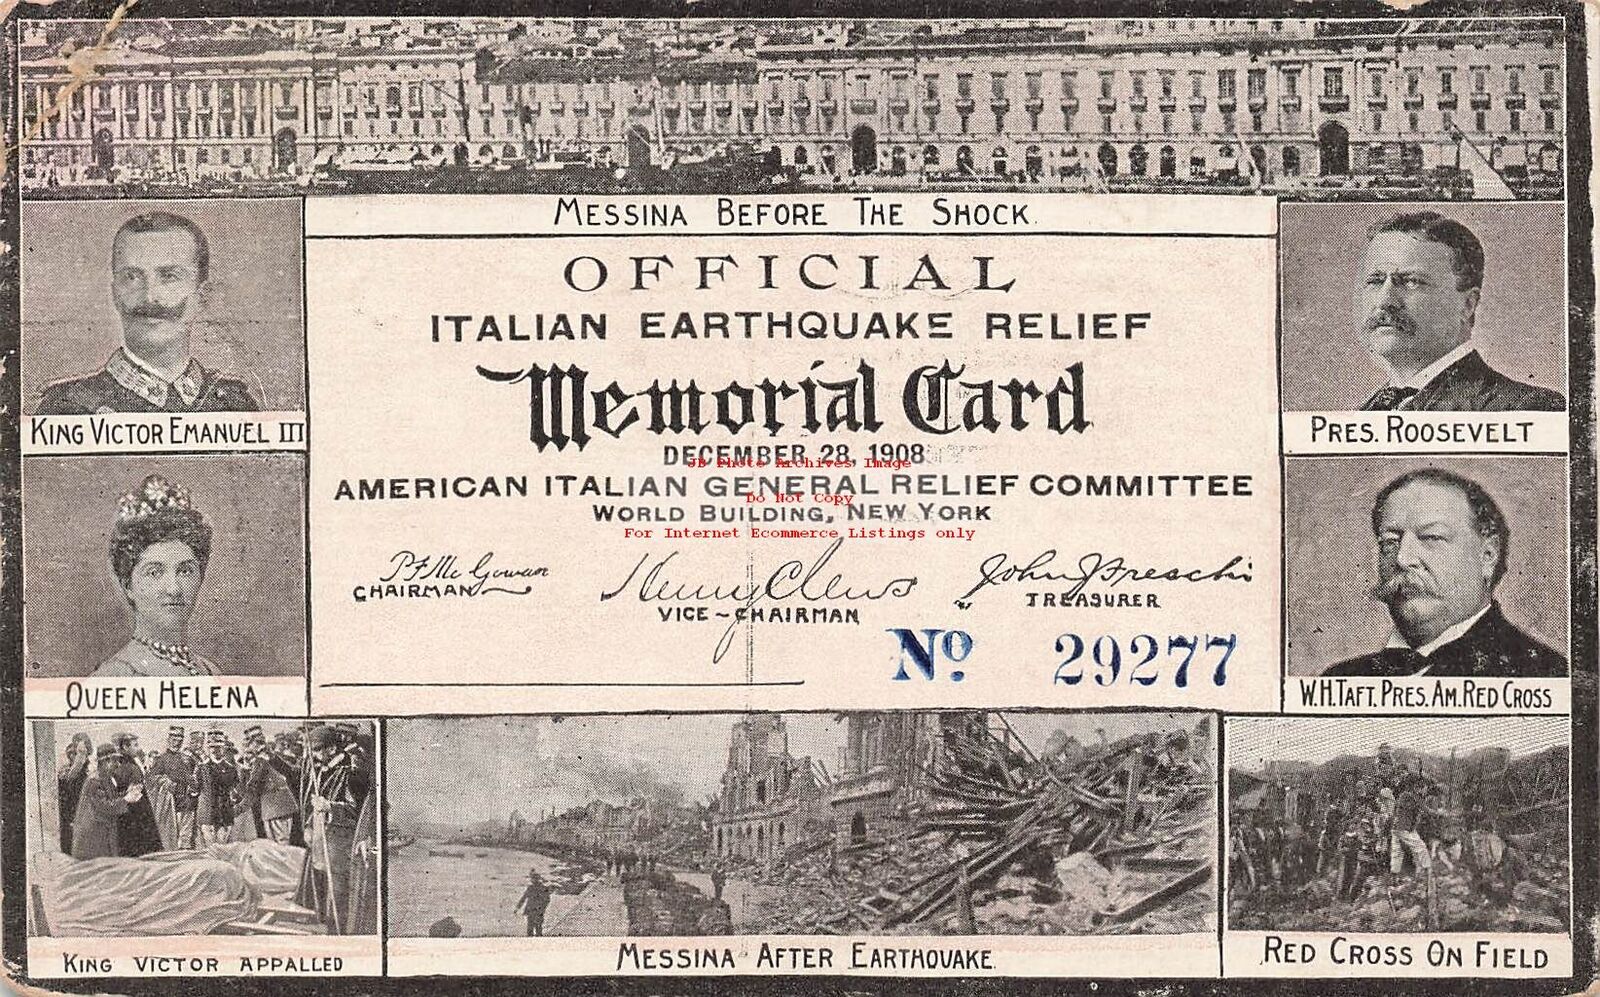 President Teddy Roosevelt, Italian Earthquake Relief Memorial Card